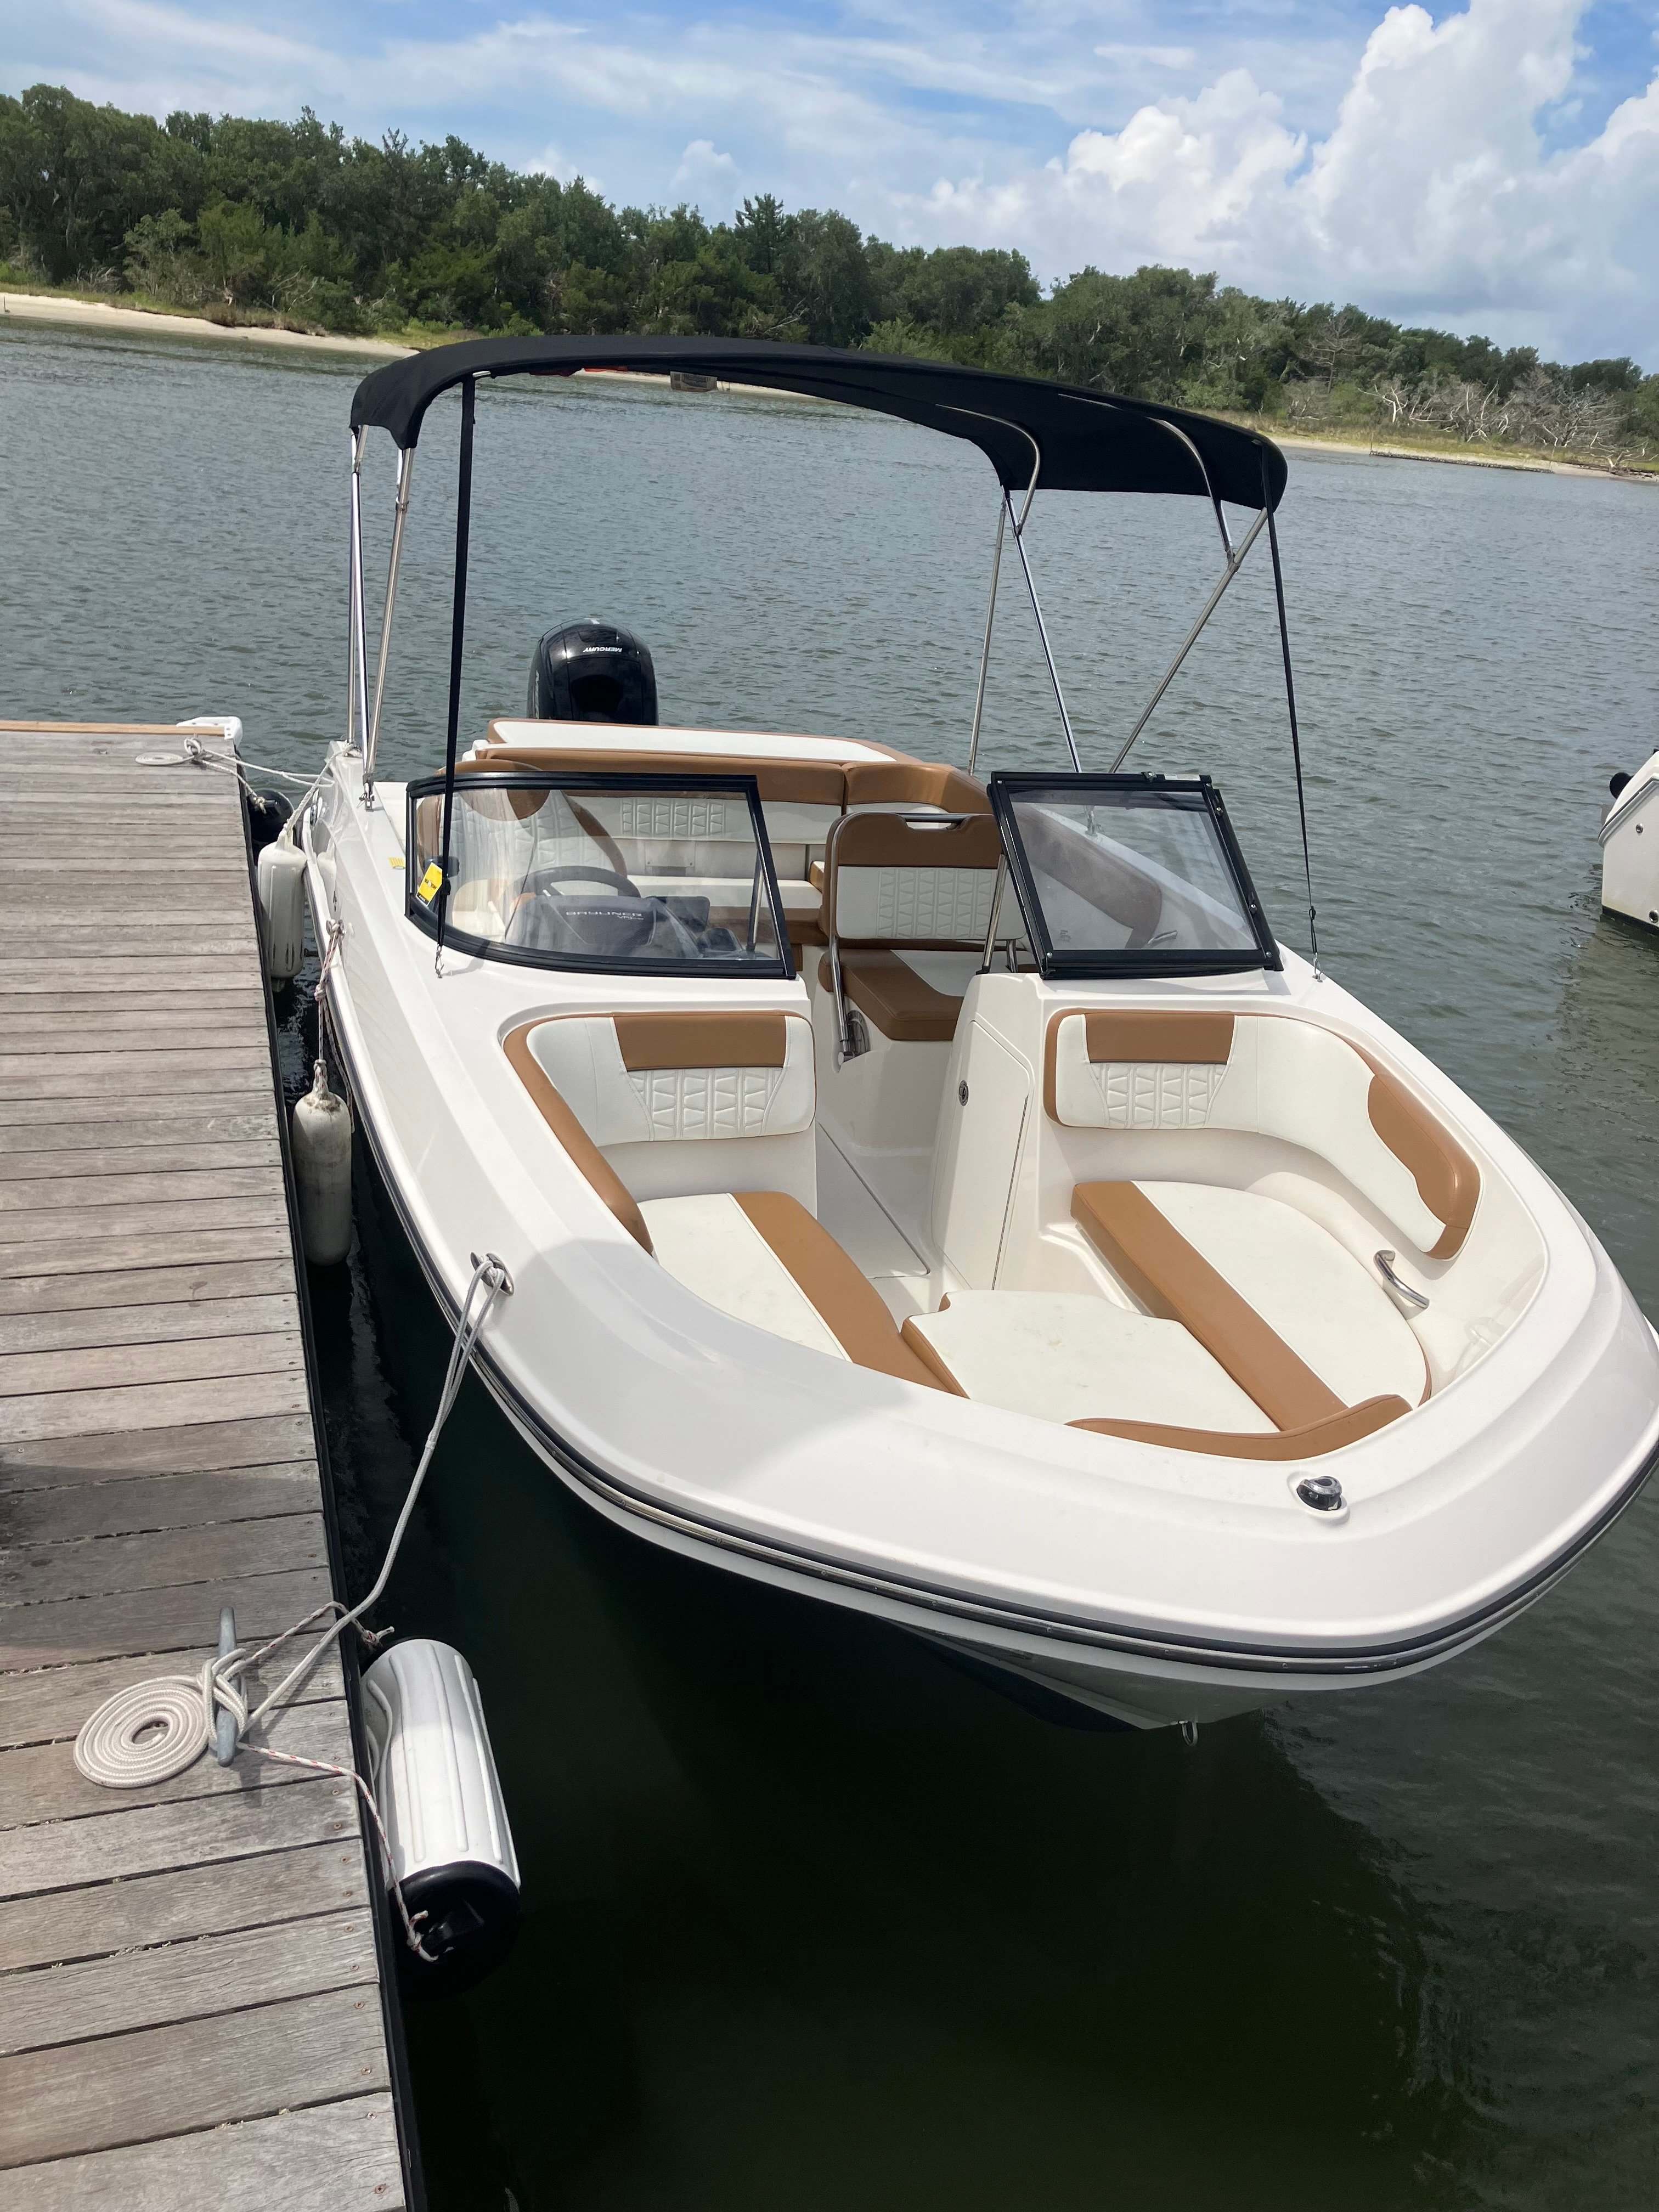 FIXIOUS (20' Bayliner Deck Boat 150 HP - Cruising)